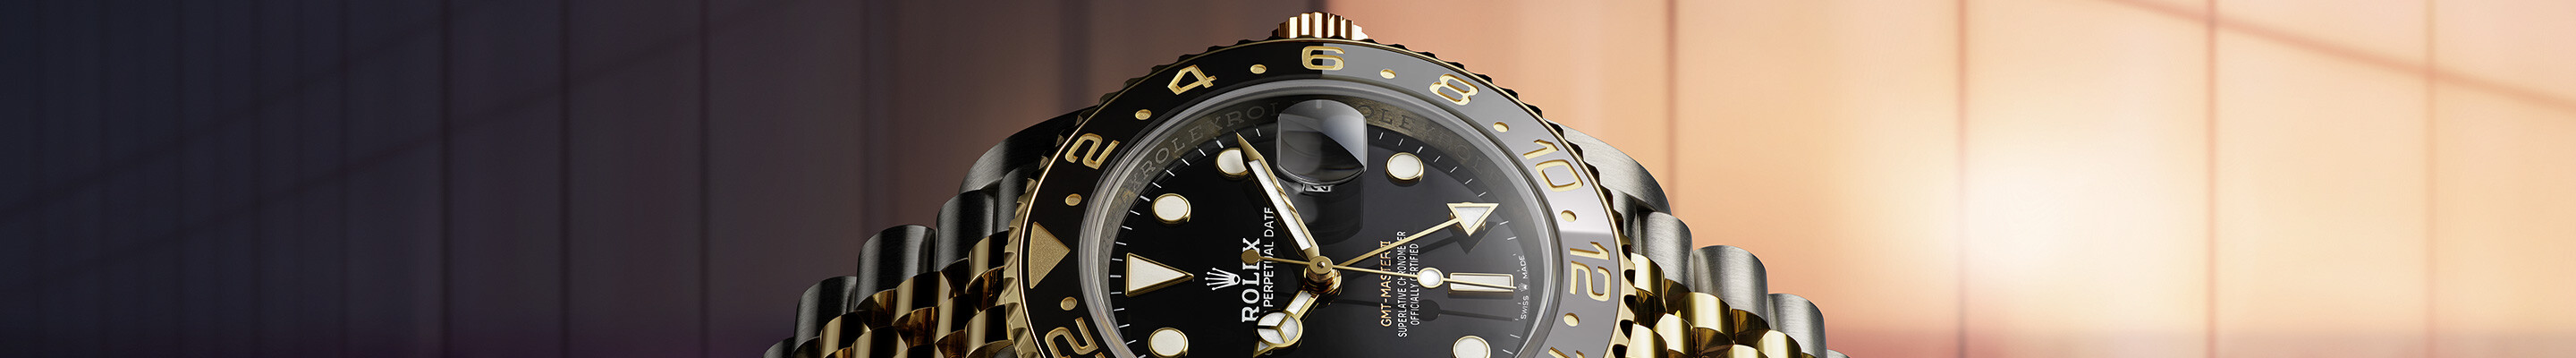 Rolex GMT-Master II chez Veron Roques